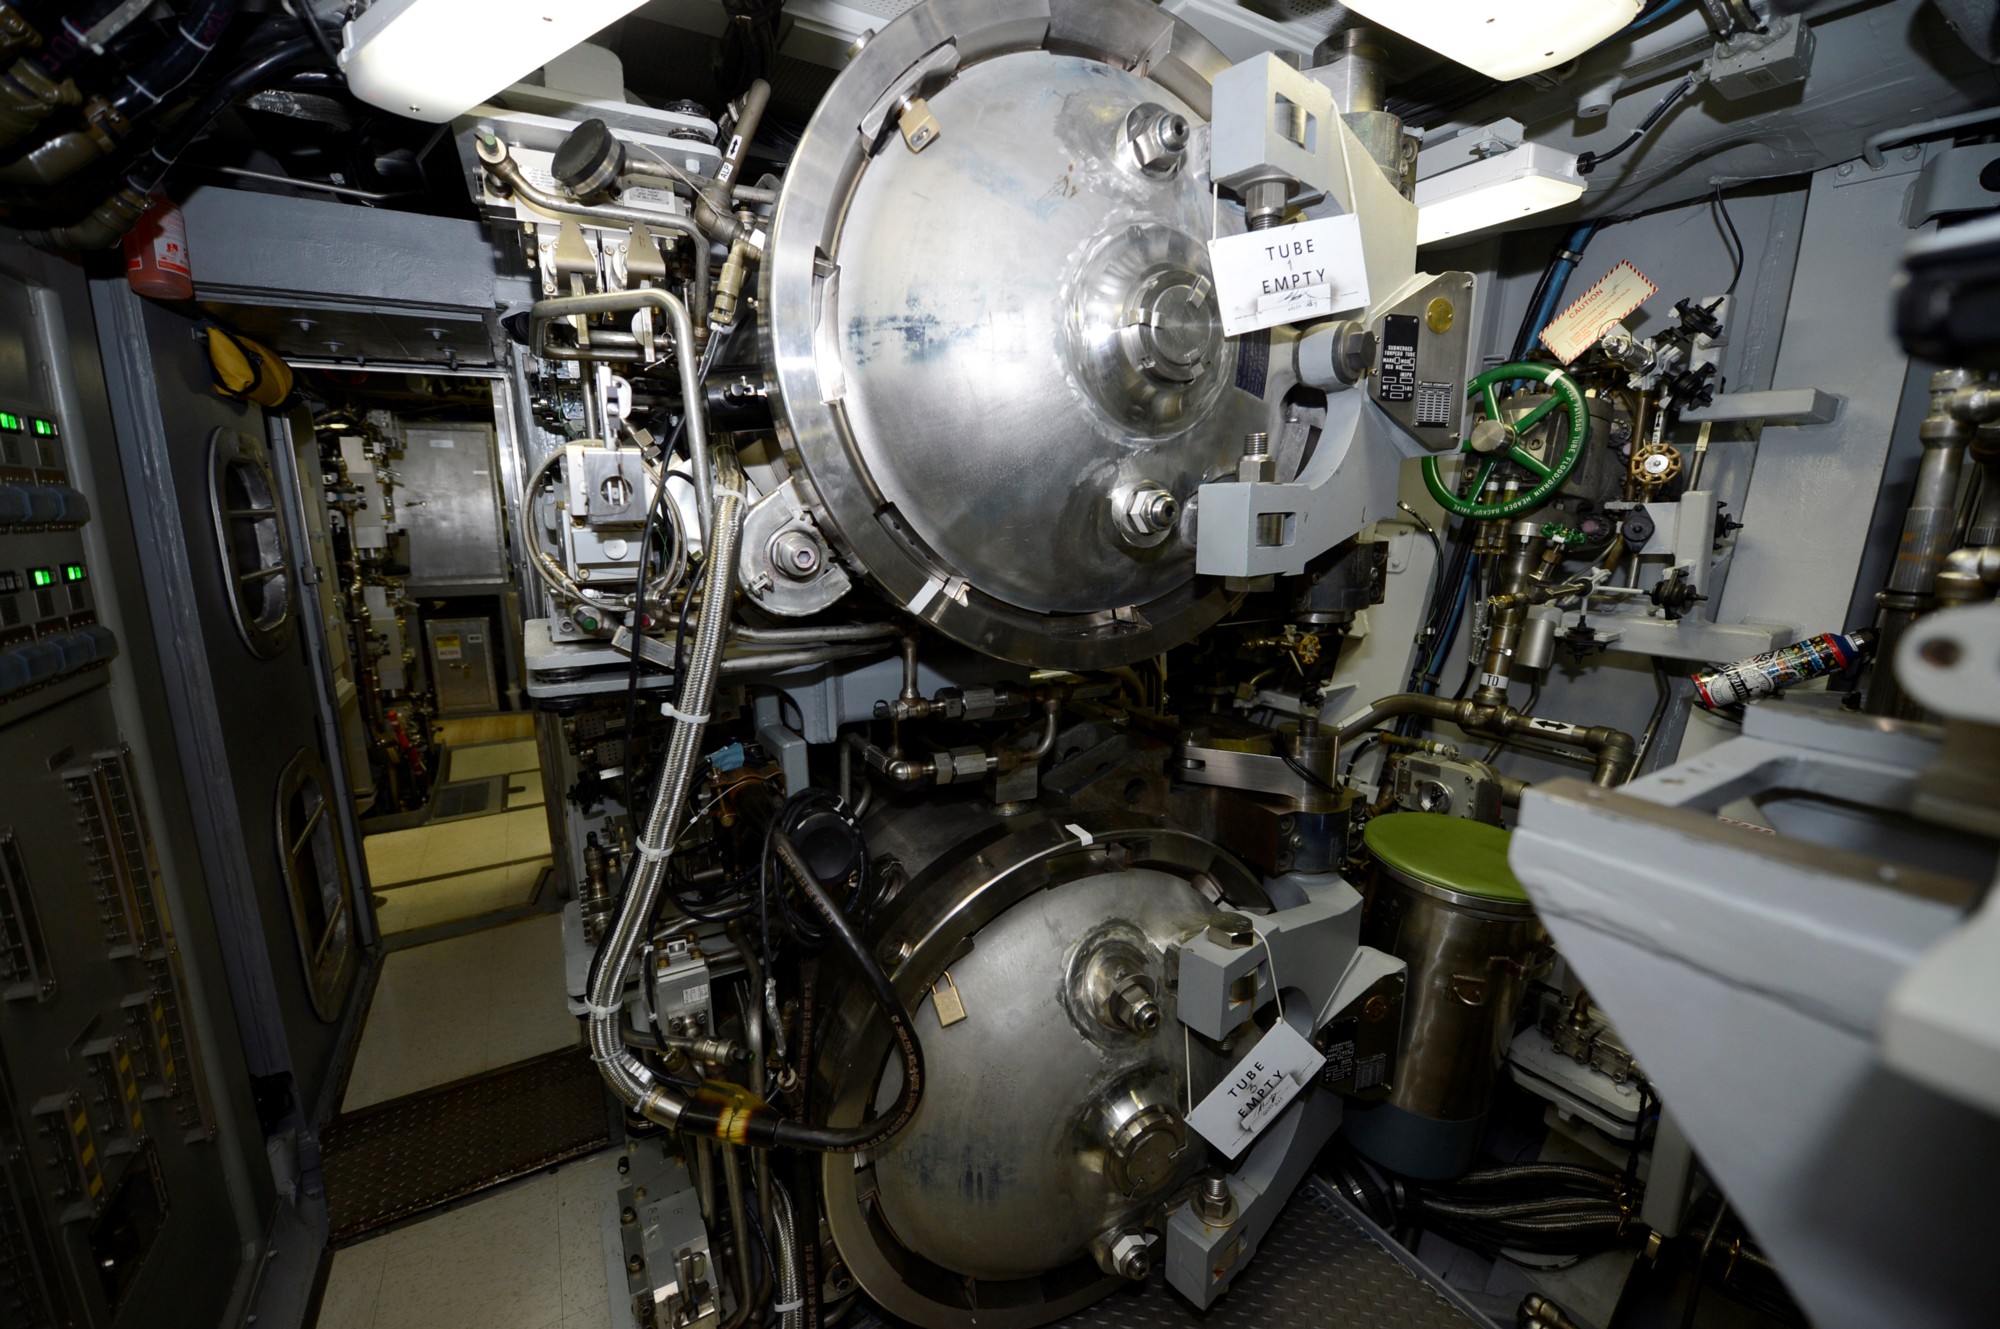 ssn-787 uss washington virginia class attack submarine us navy 13 torpedo tubes